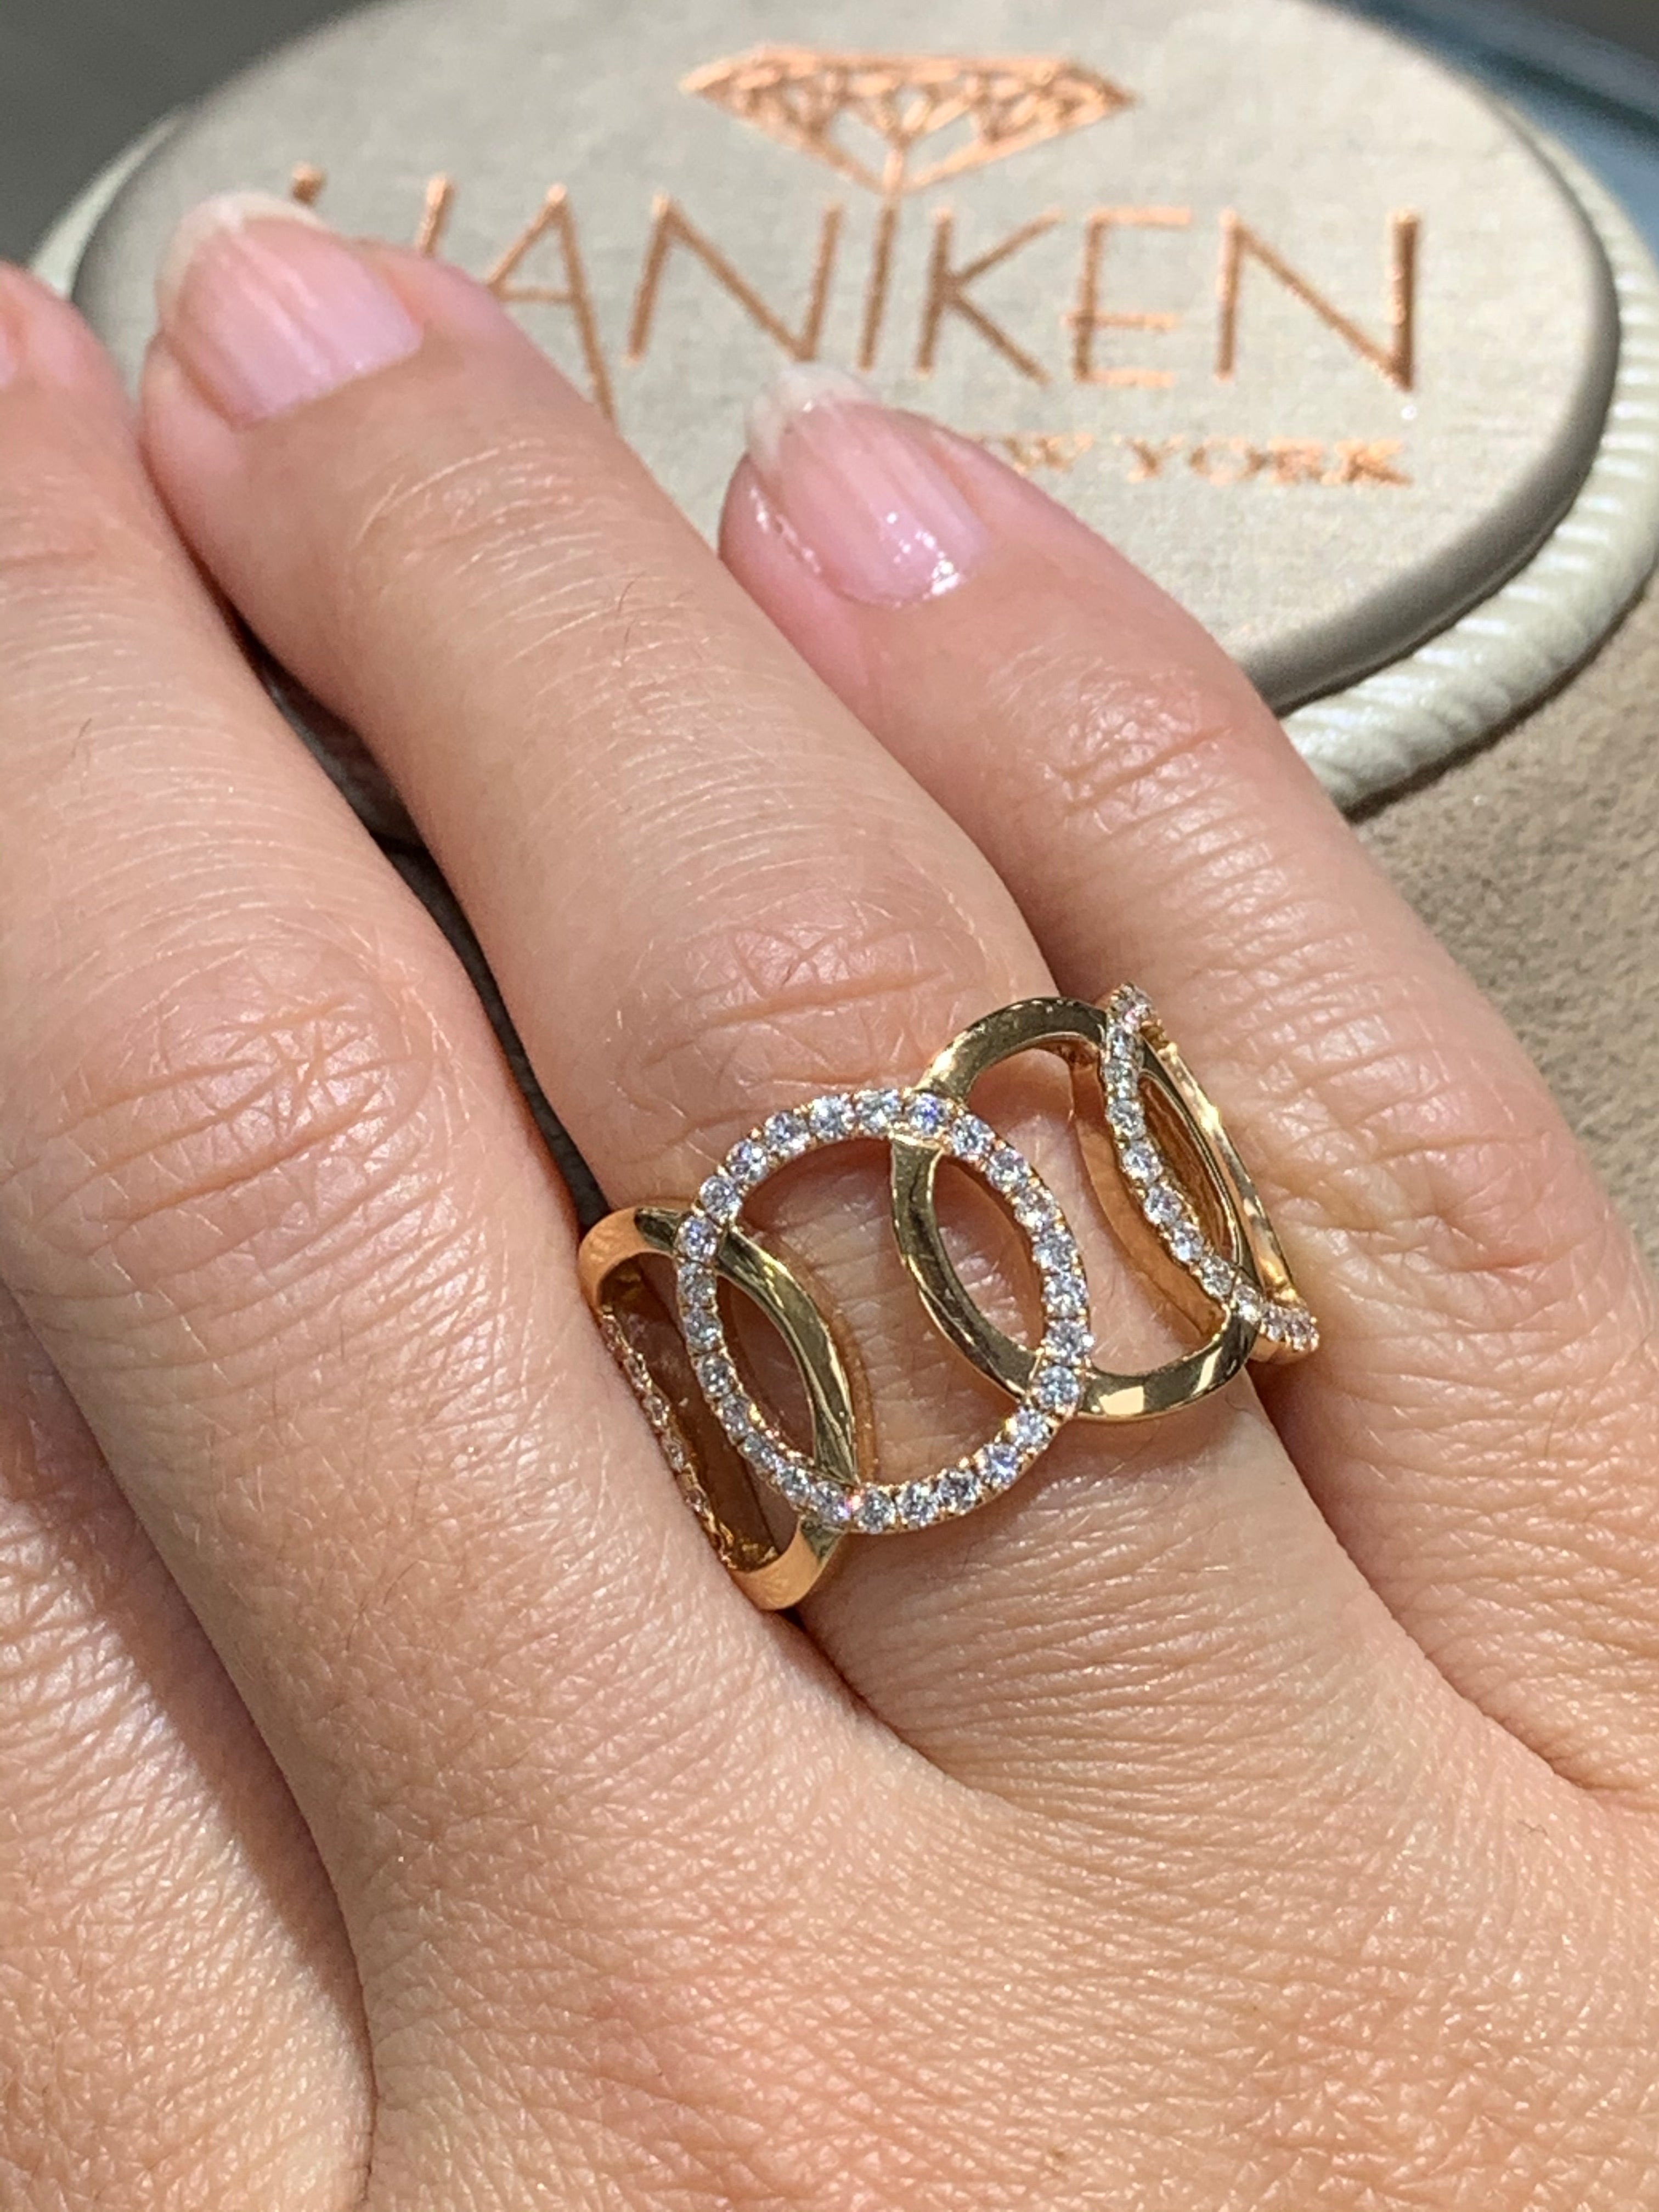 1.18ctw Diamond Rose Gold Ring - HANIKEN JEWELERS NEW-YORK